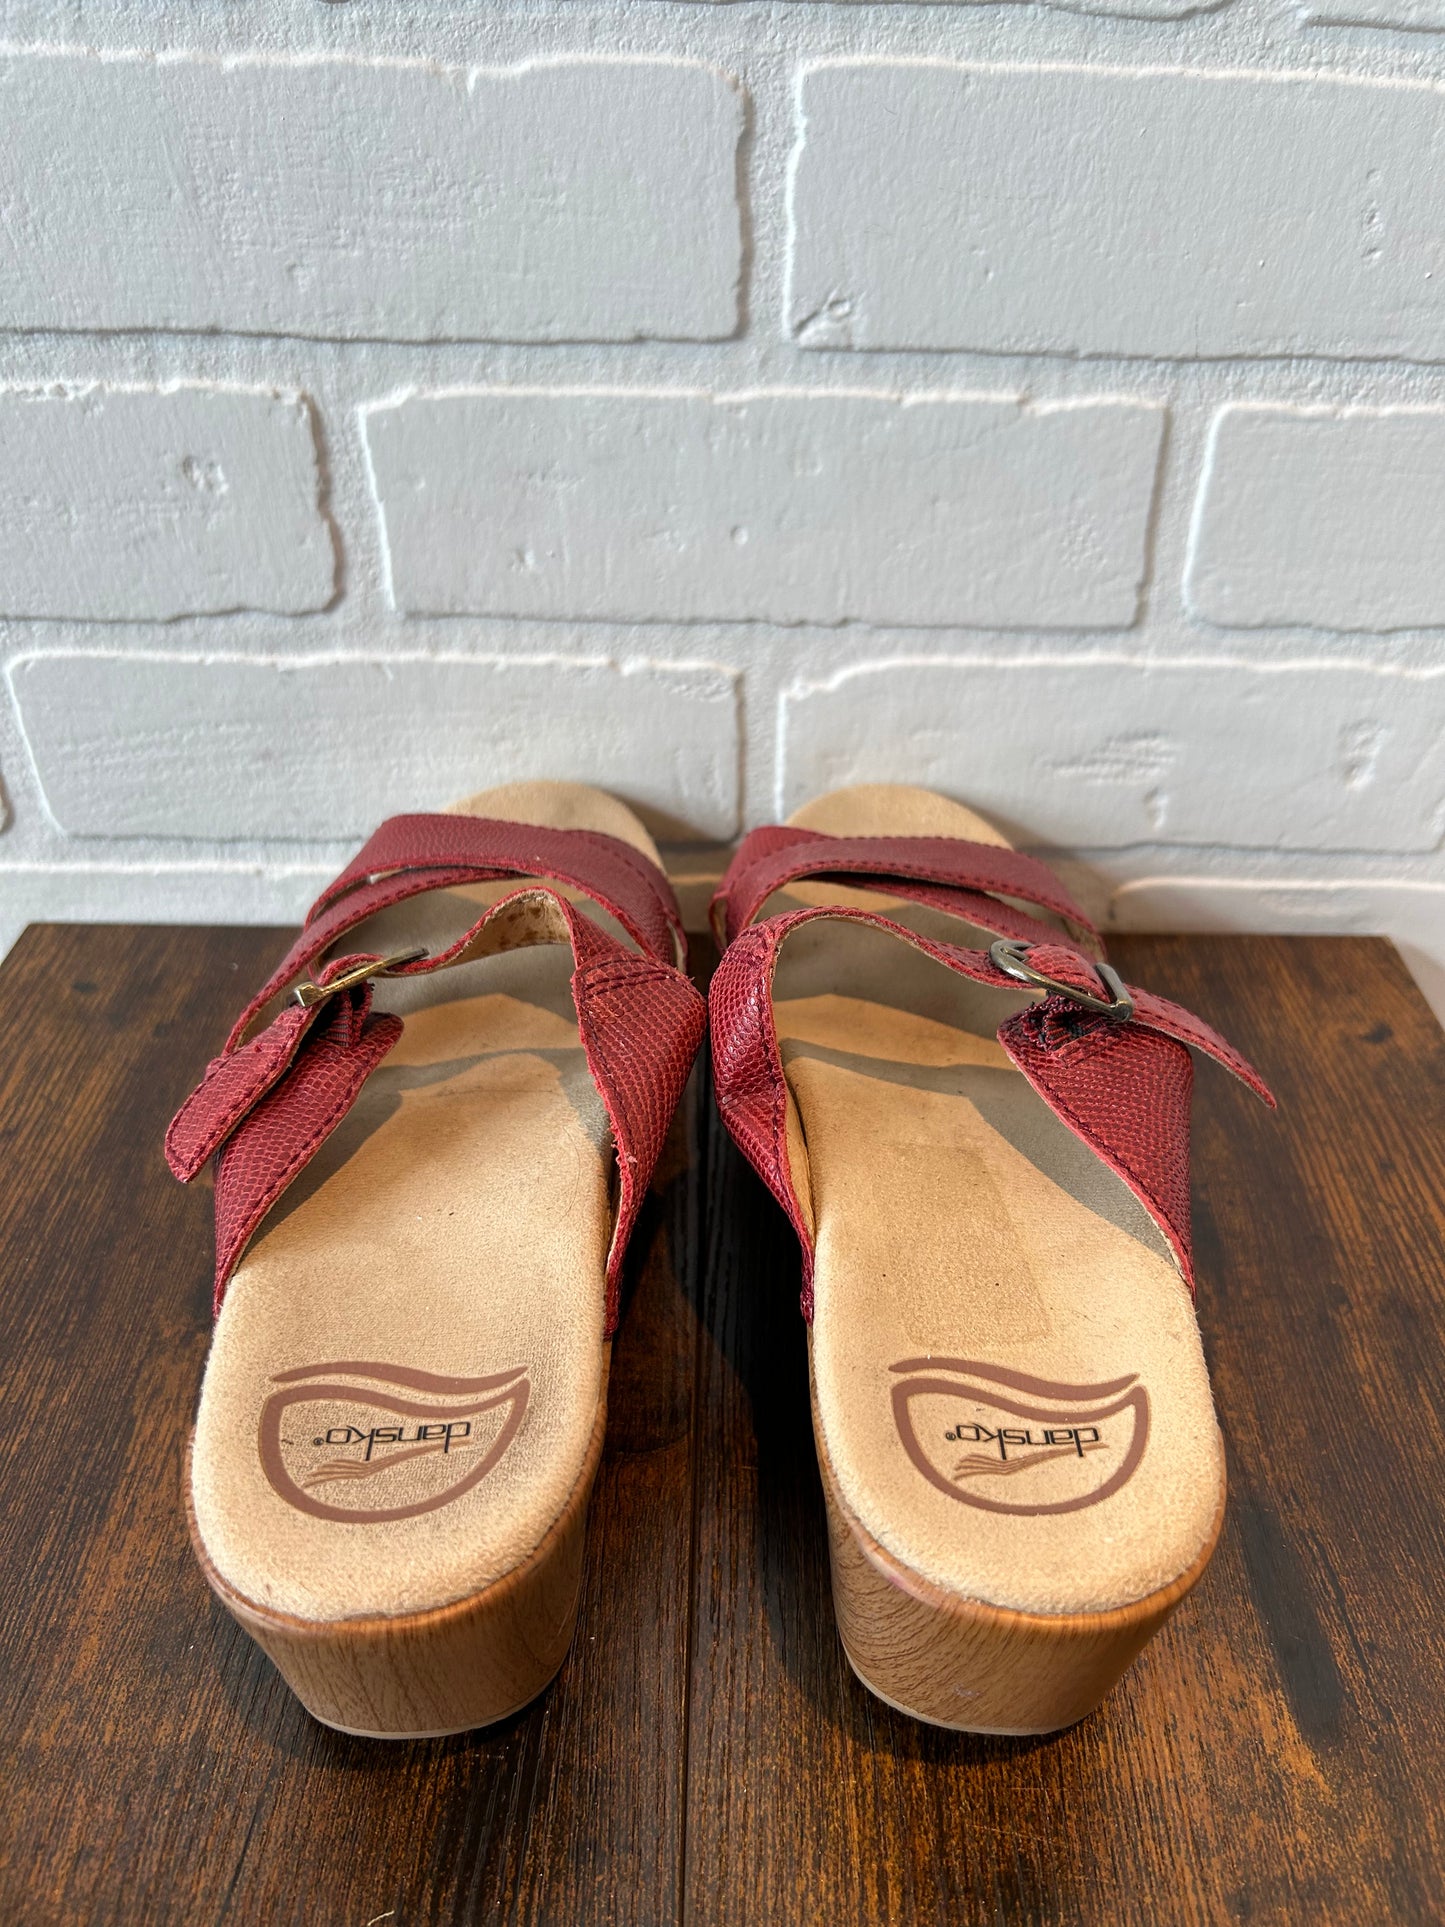 Sandals Flats By Dansko  Size: 8.5